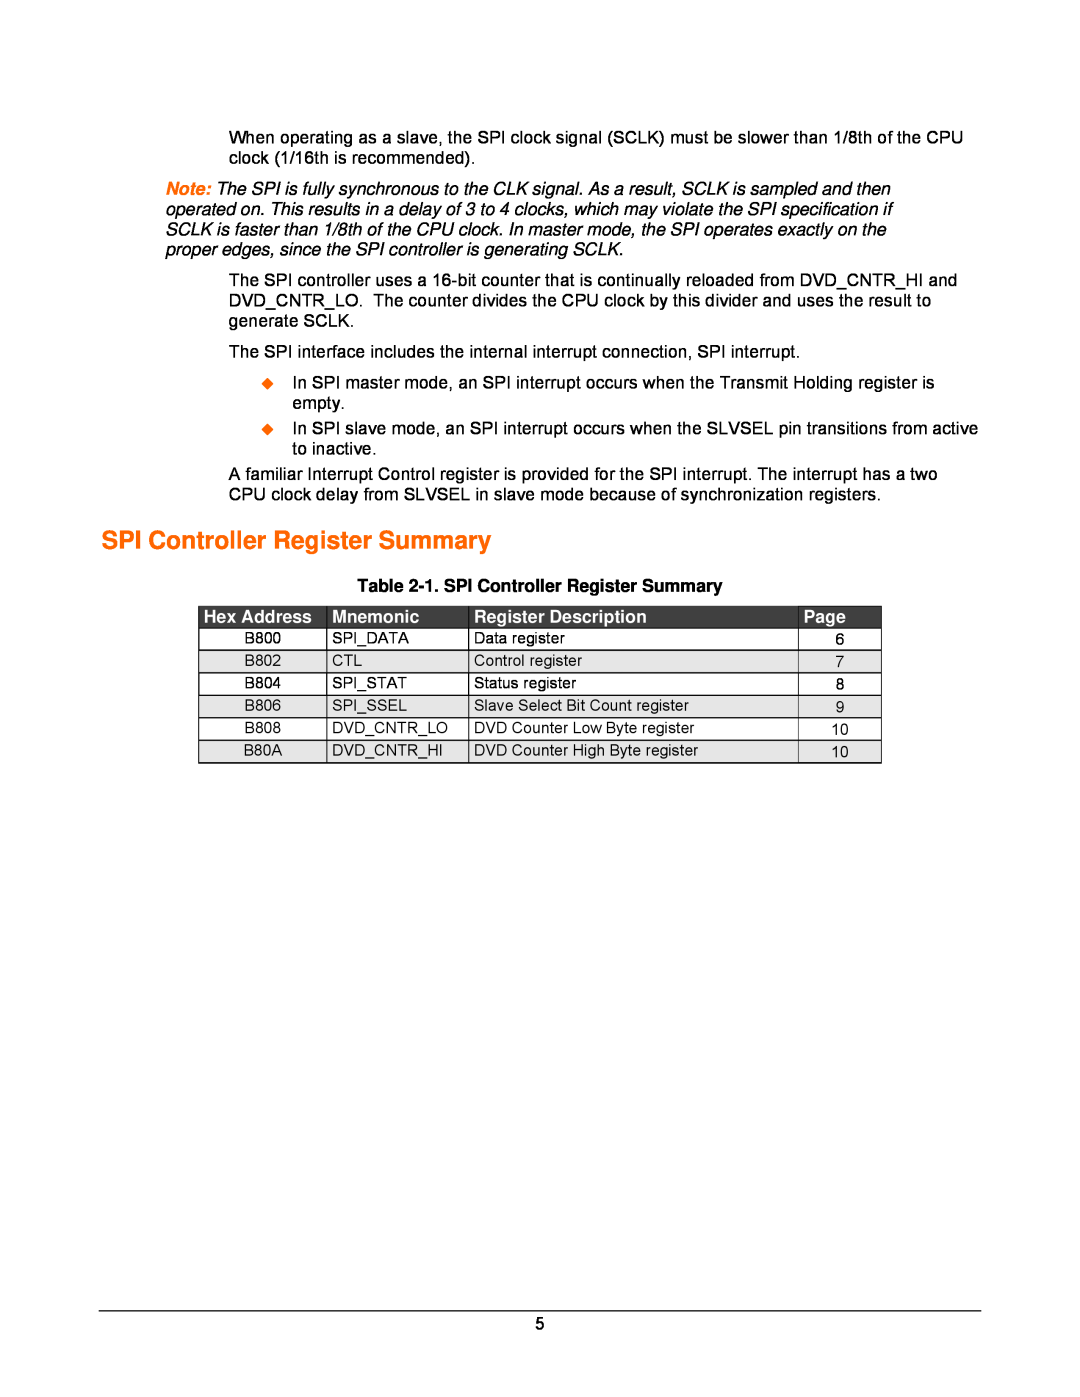 Lantronix DSTni-EX manual 1. SPI Controller Register Summary 